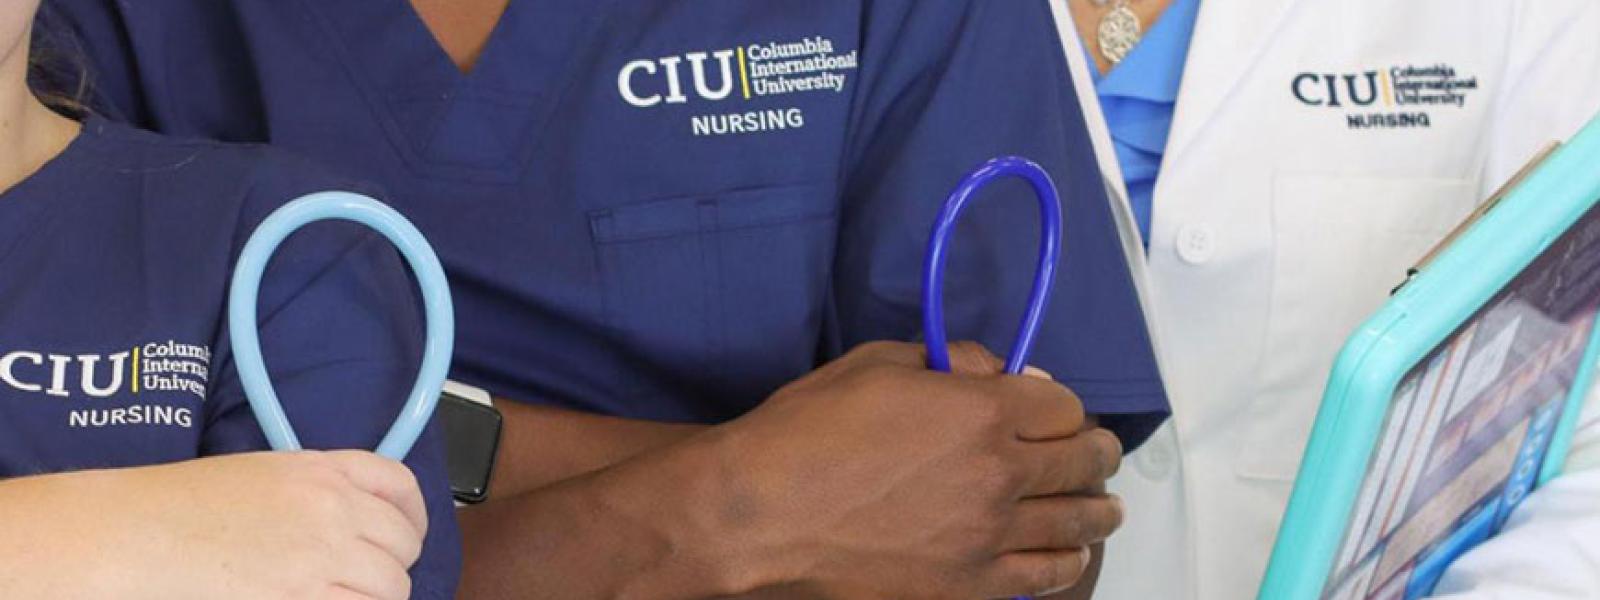 Columbia International University Nursing 